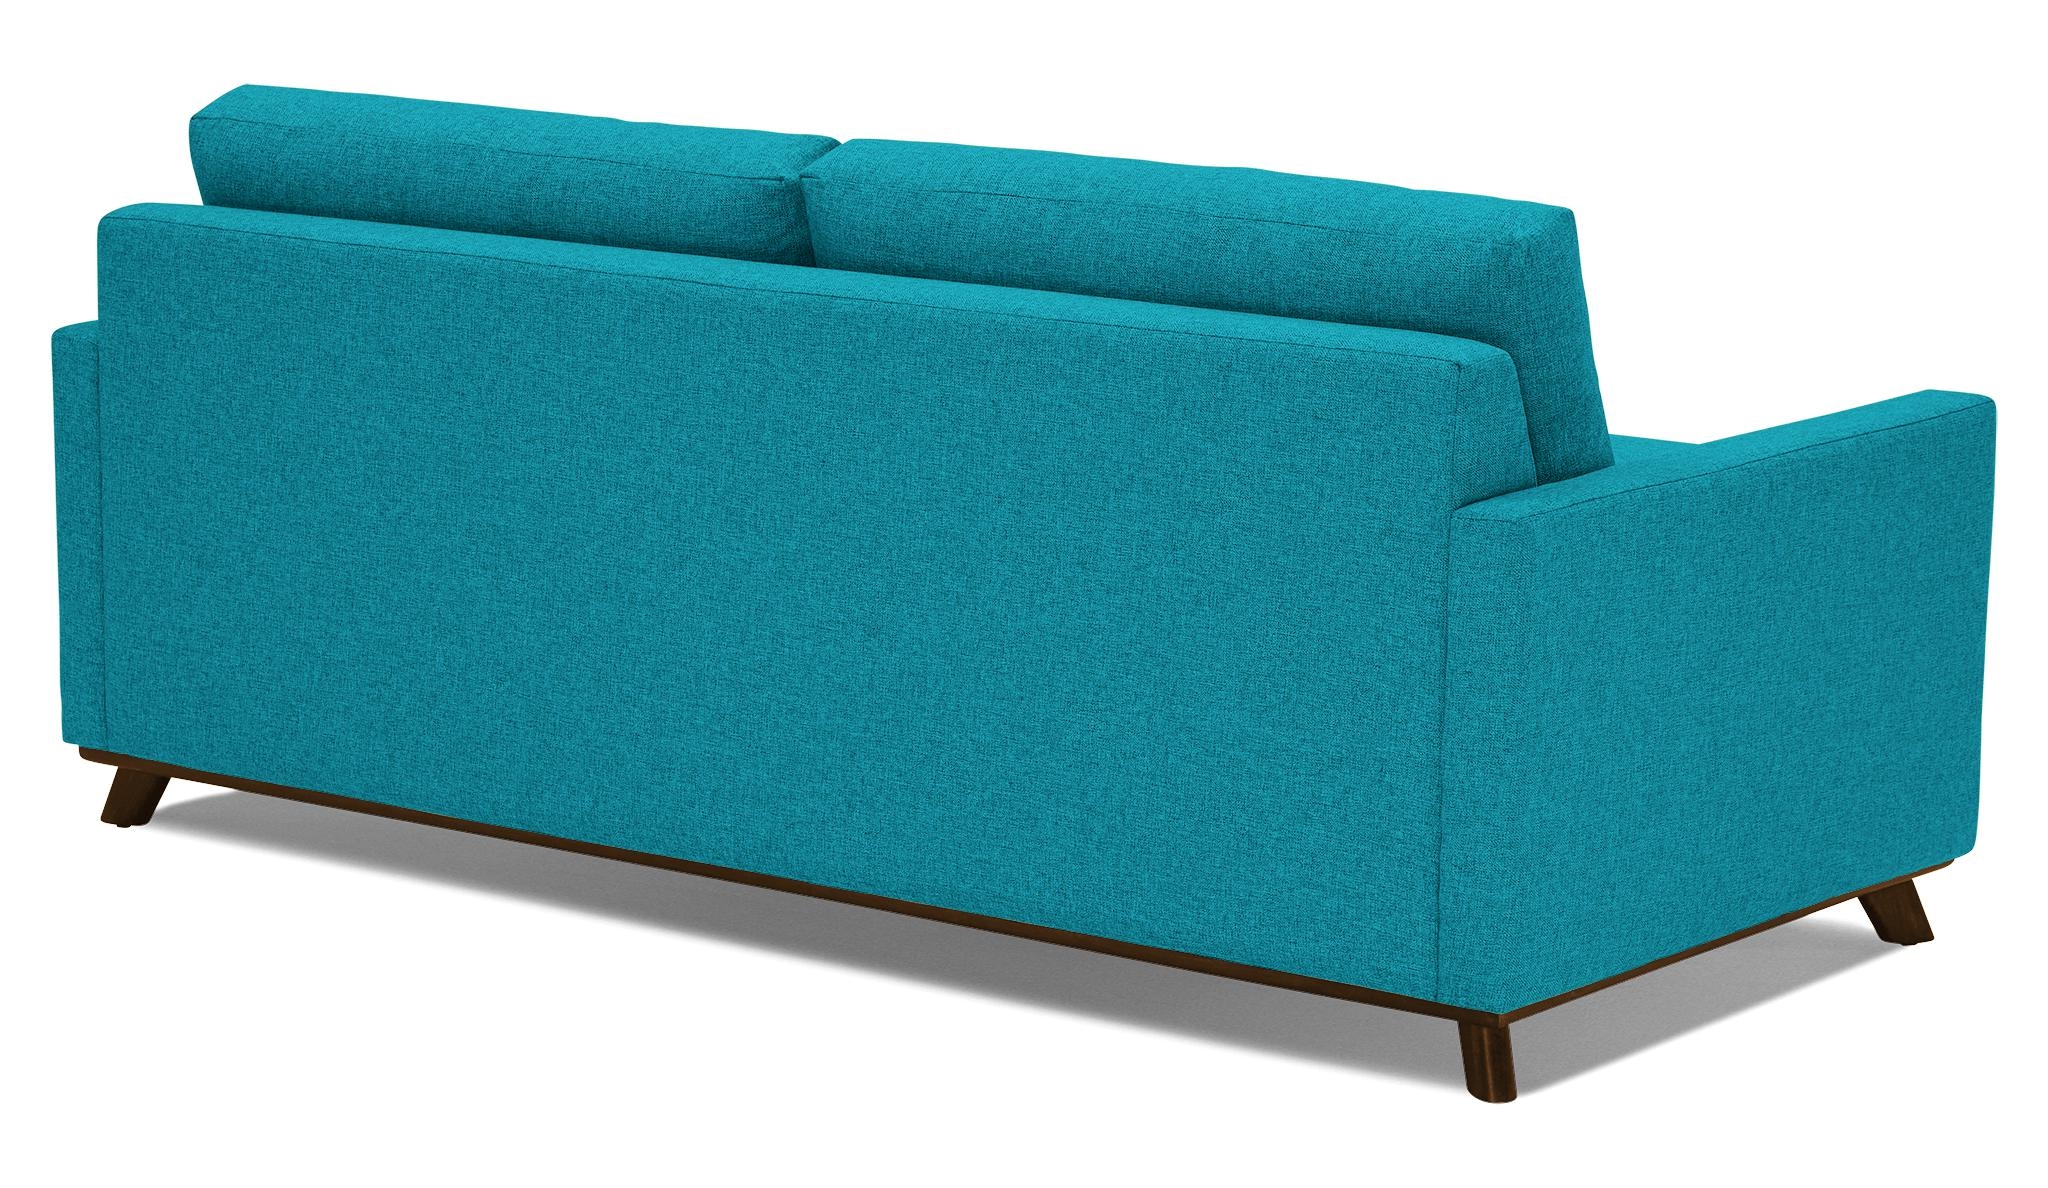 Blue Hopson Mid Century Modern Sleeper Sofa - Vibe Aquatic - Mocha - Image 3